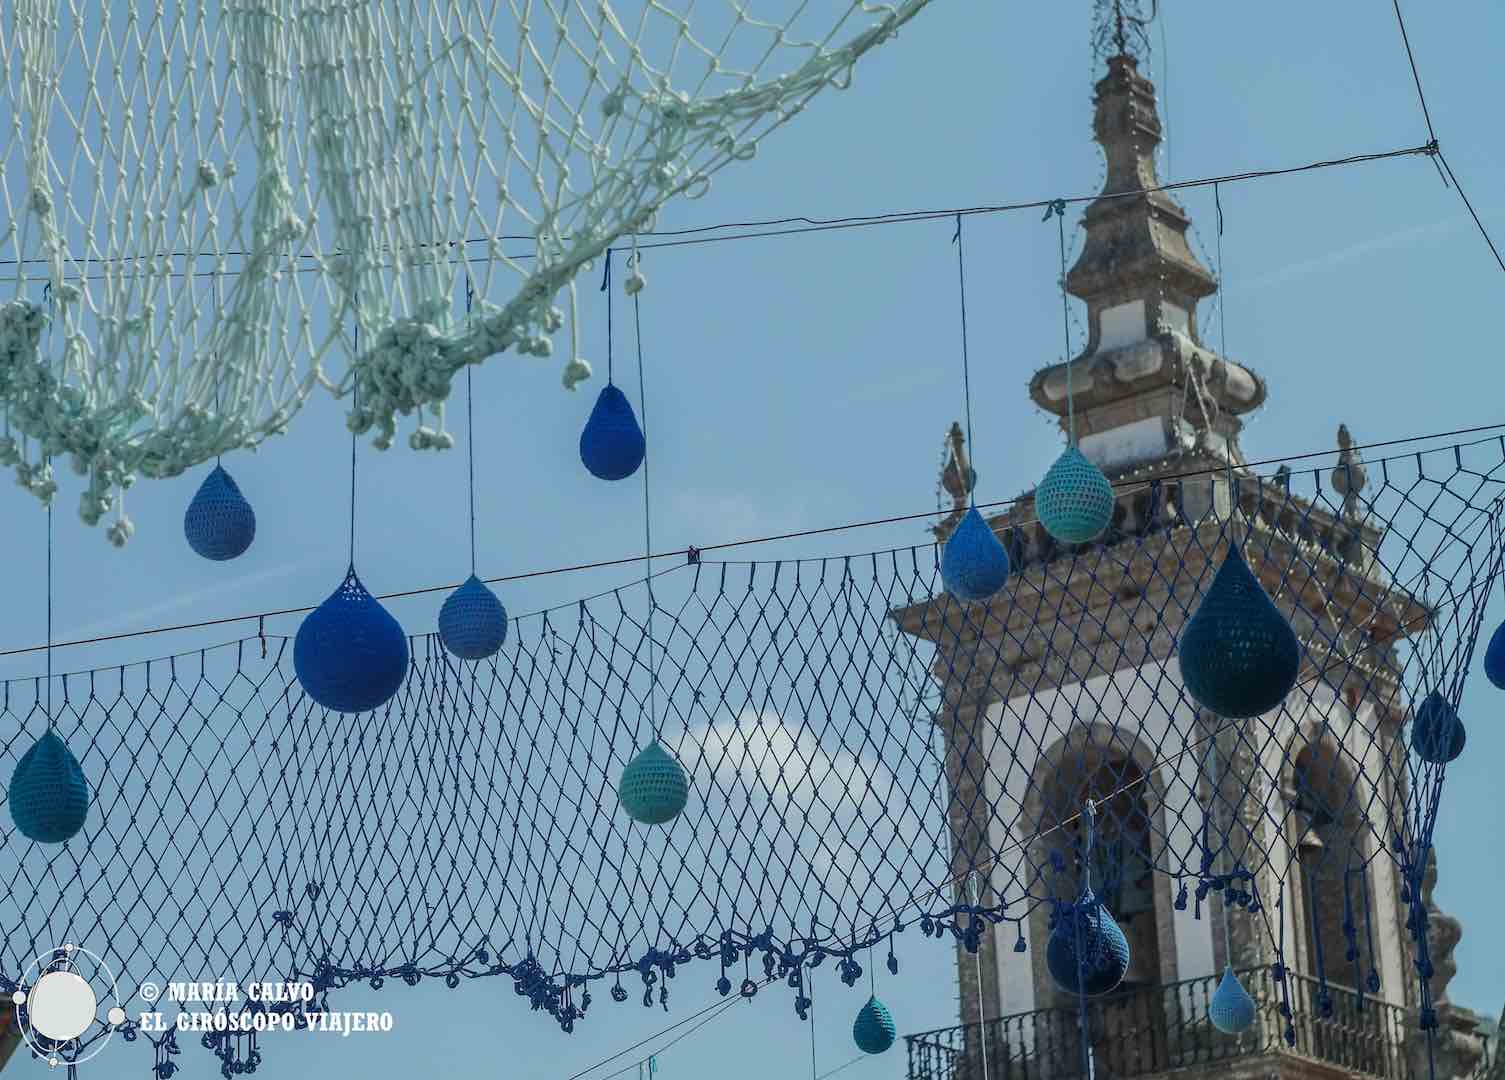 Vilanova de Cerveira, vila das artes de Portugal, saca su crochet a la calle